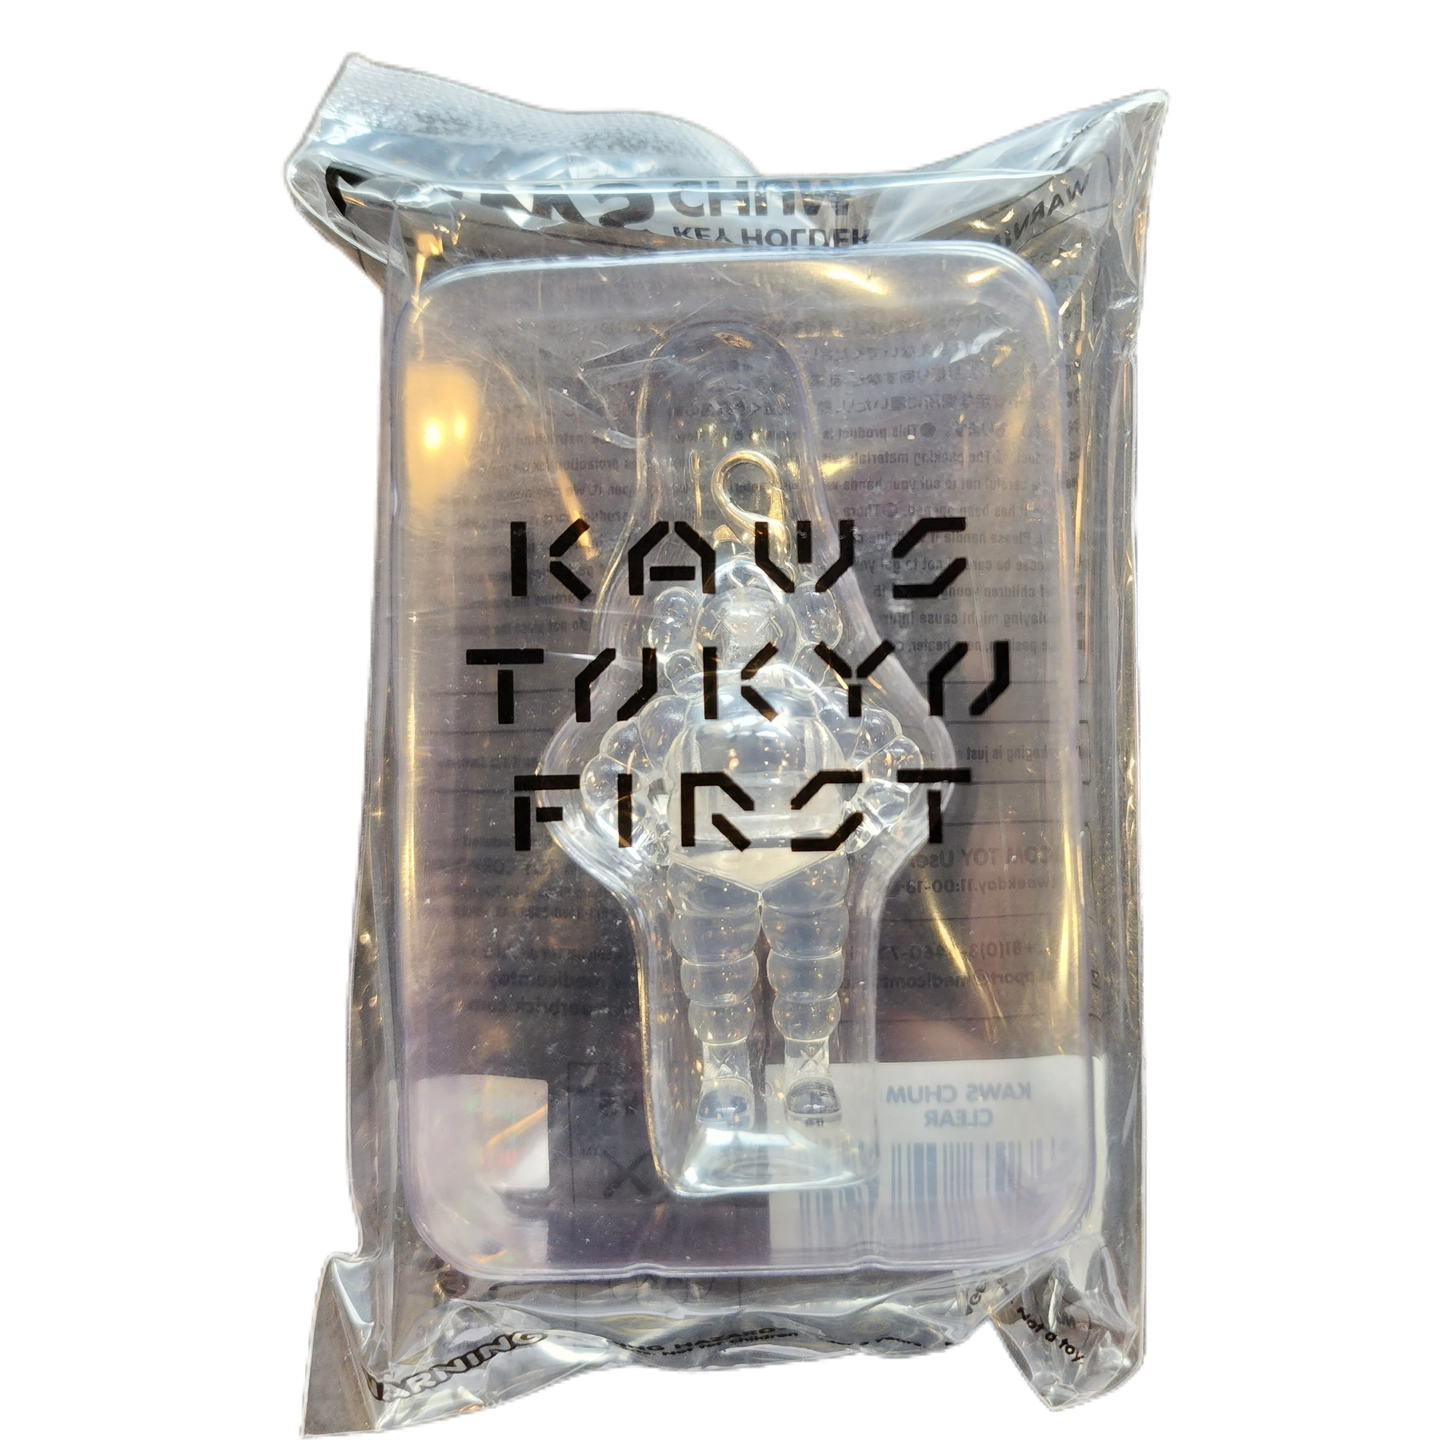 Kaws - "Tokyo First Chum" - Keychain